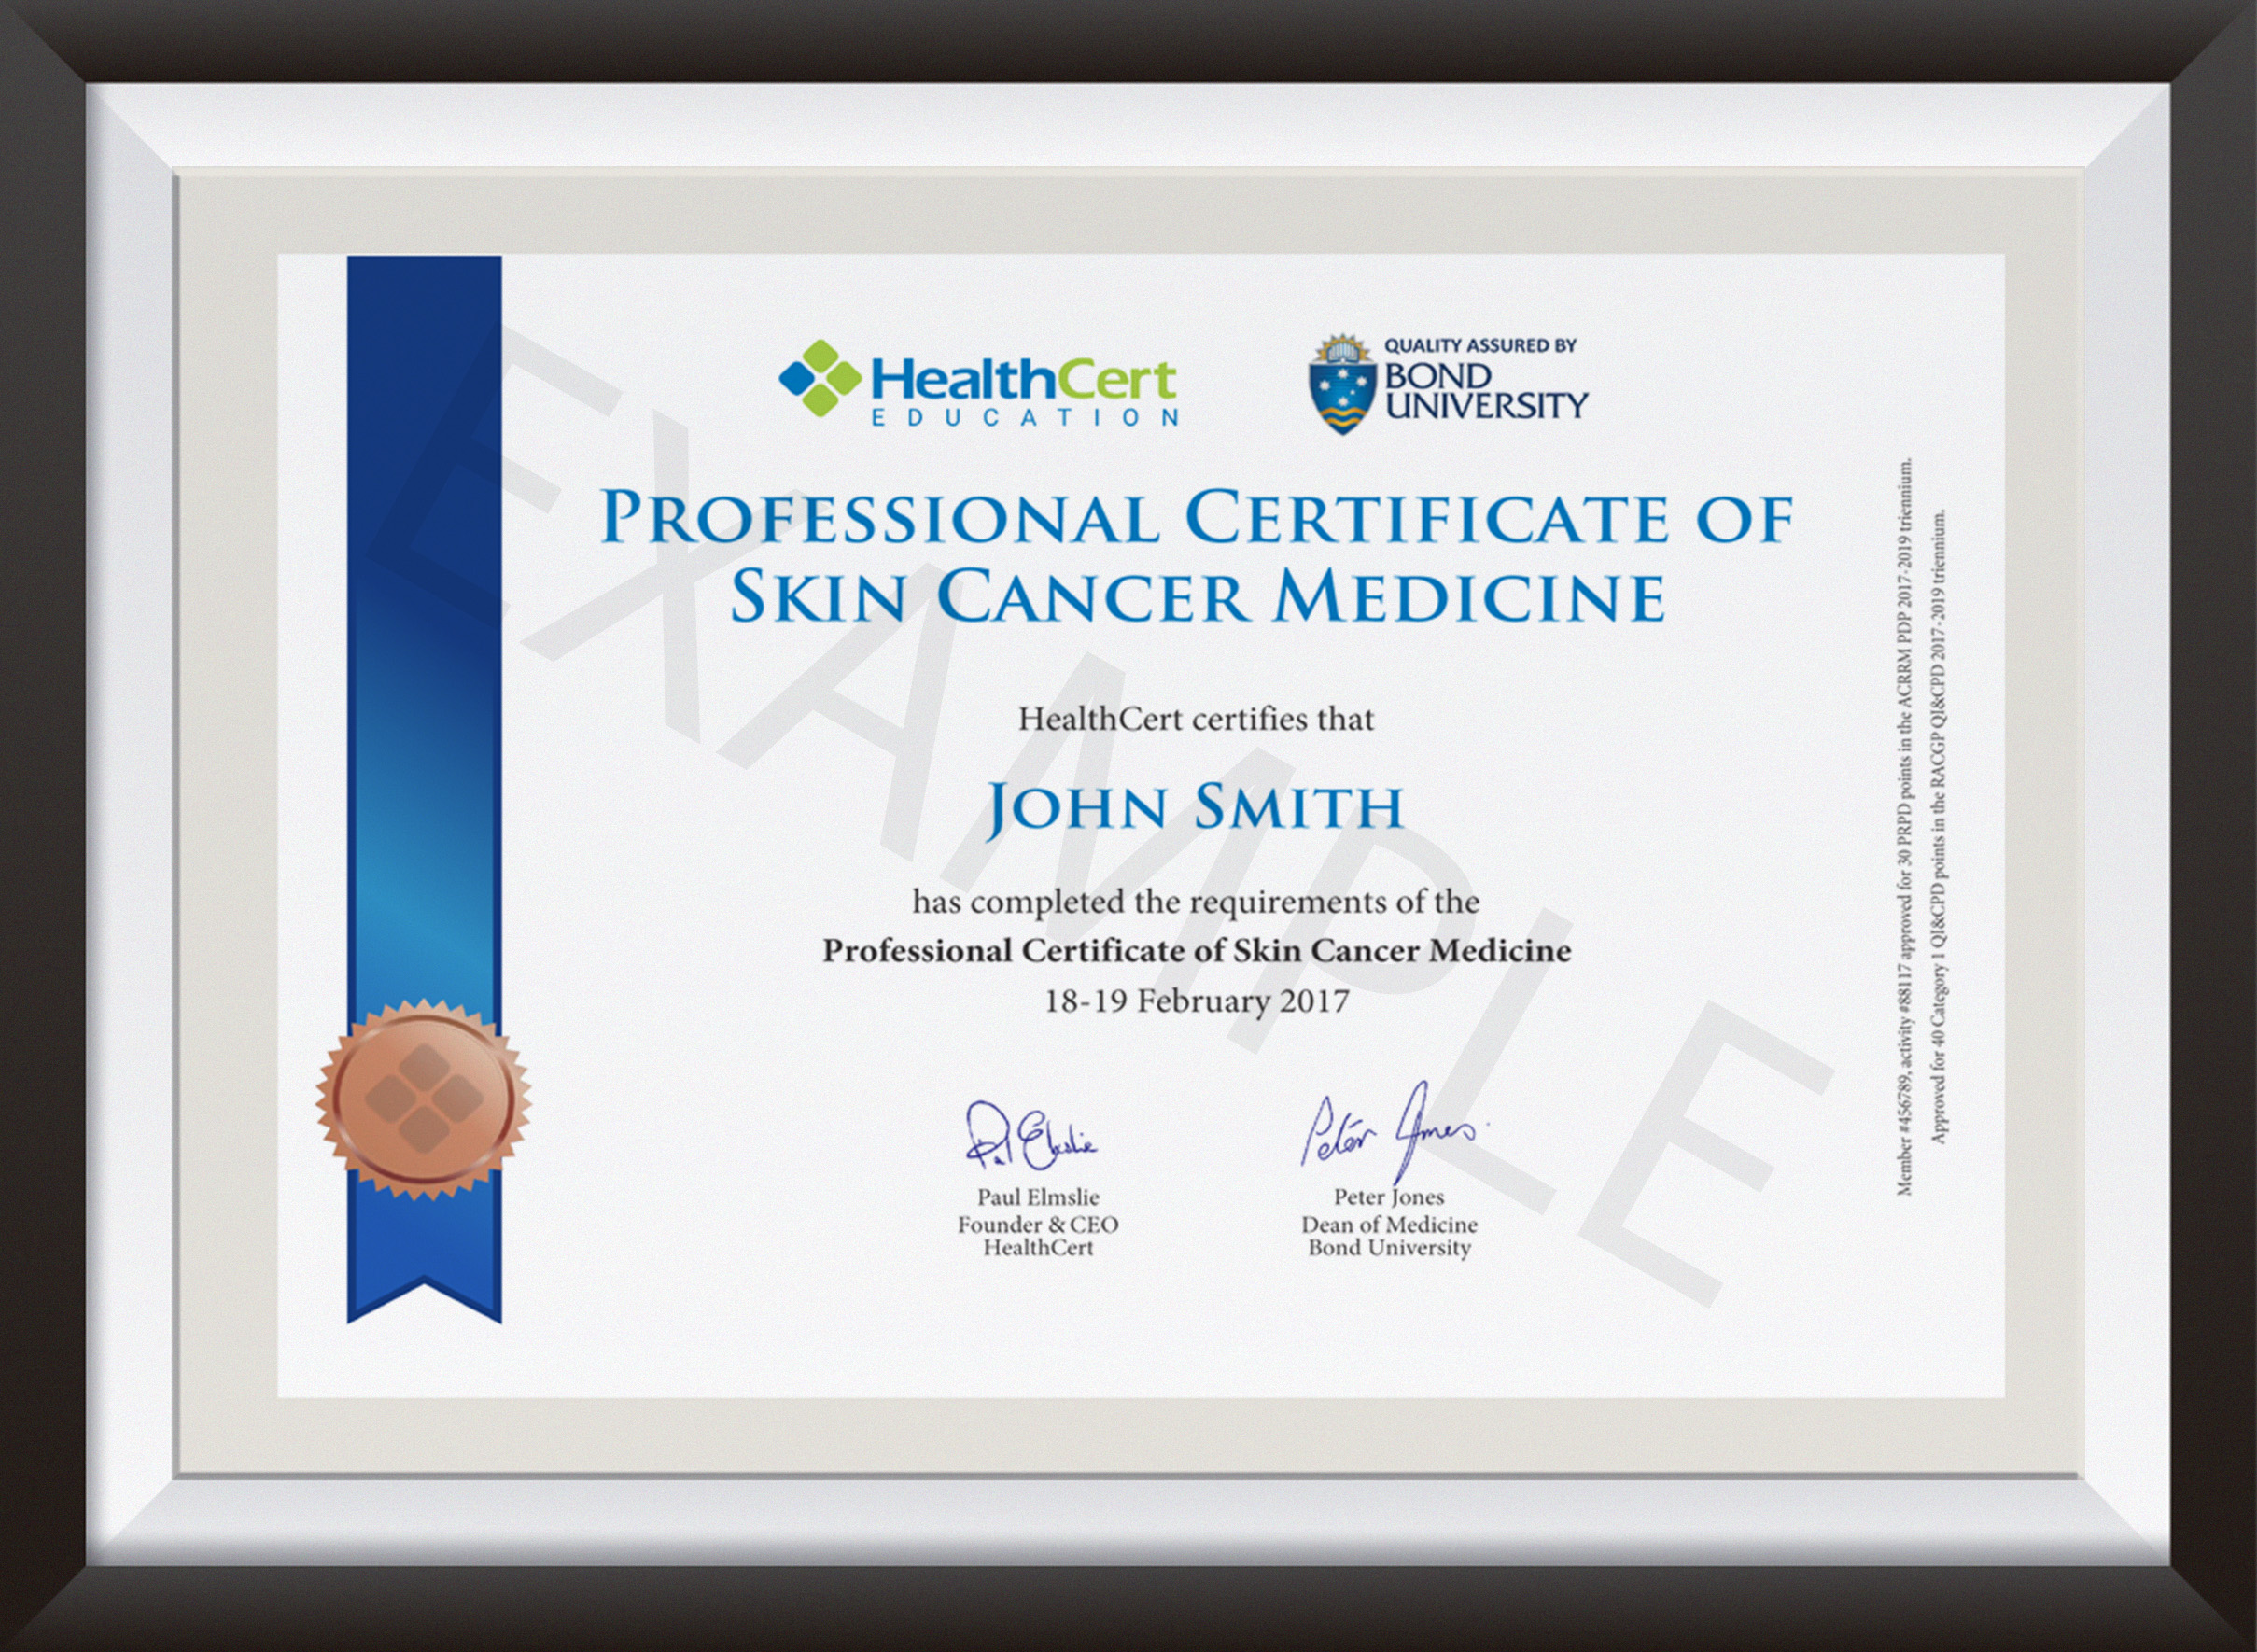 1. Professional Certificate of Skin Cancer Medicine